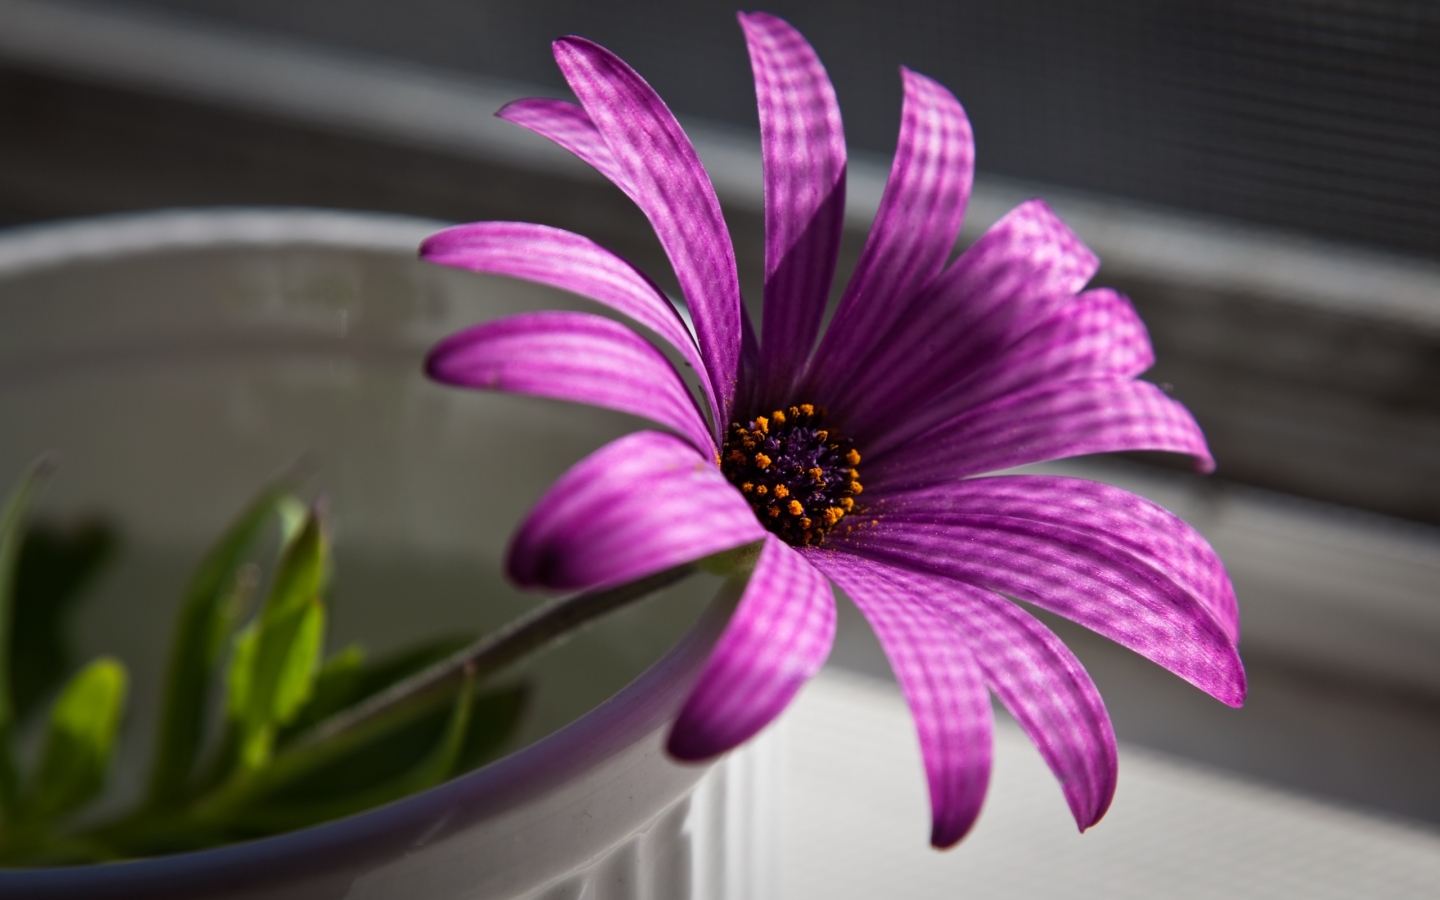 Superb Purple Flower for 1440 x 900 widescreen resolution